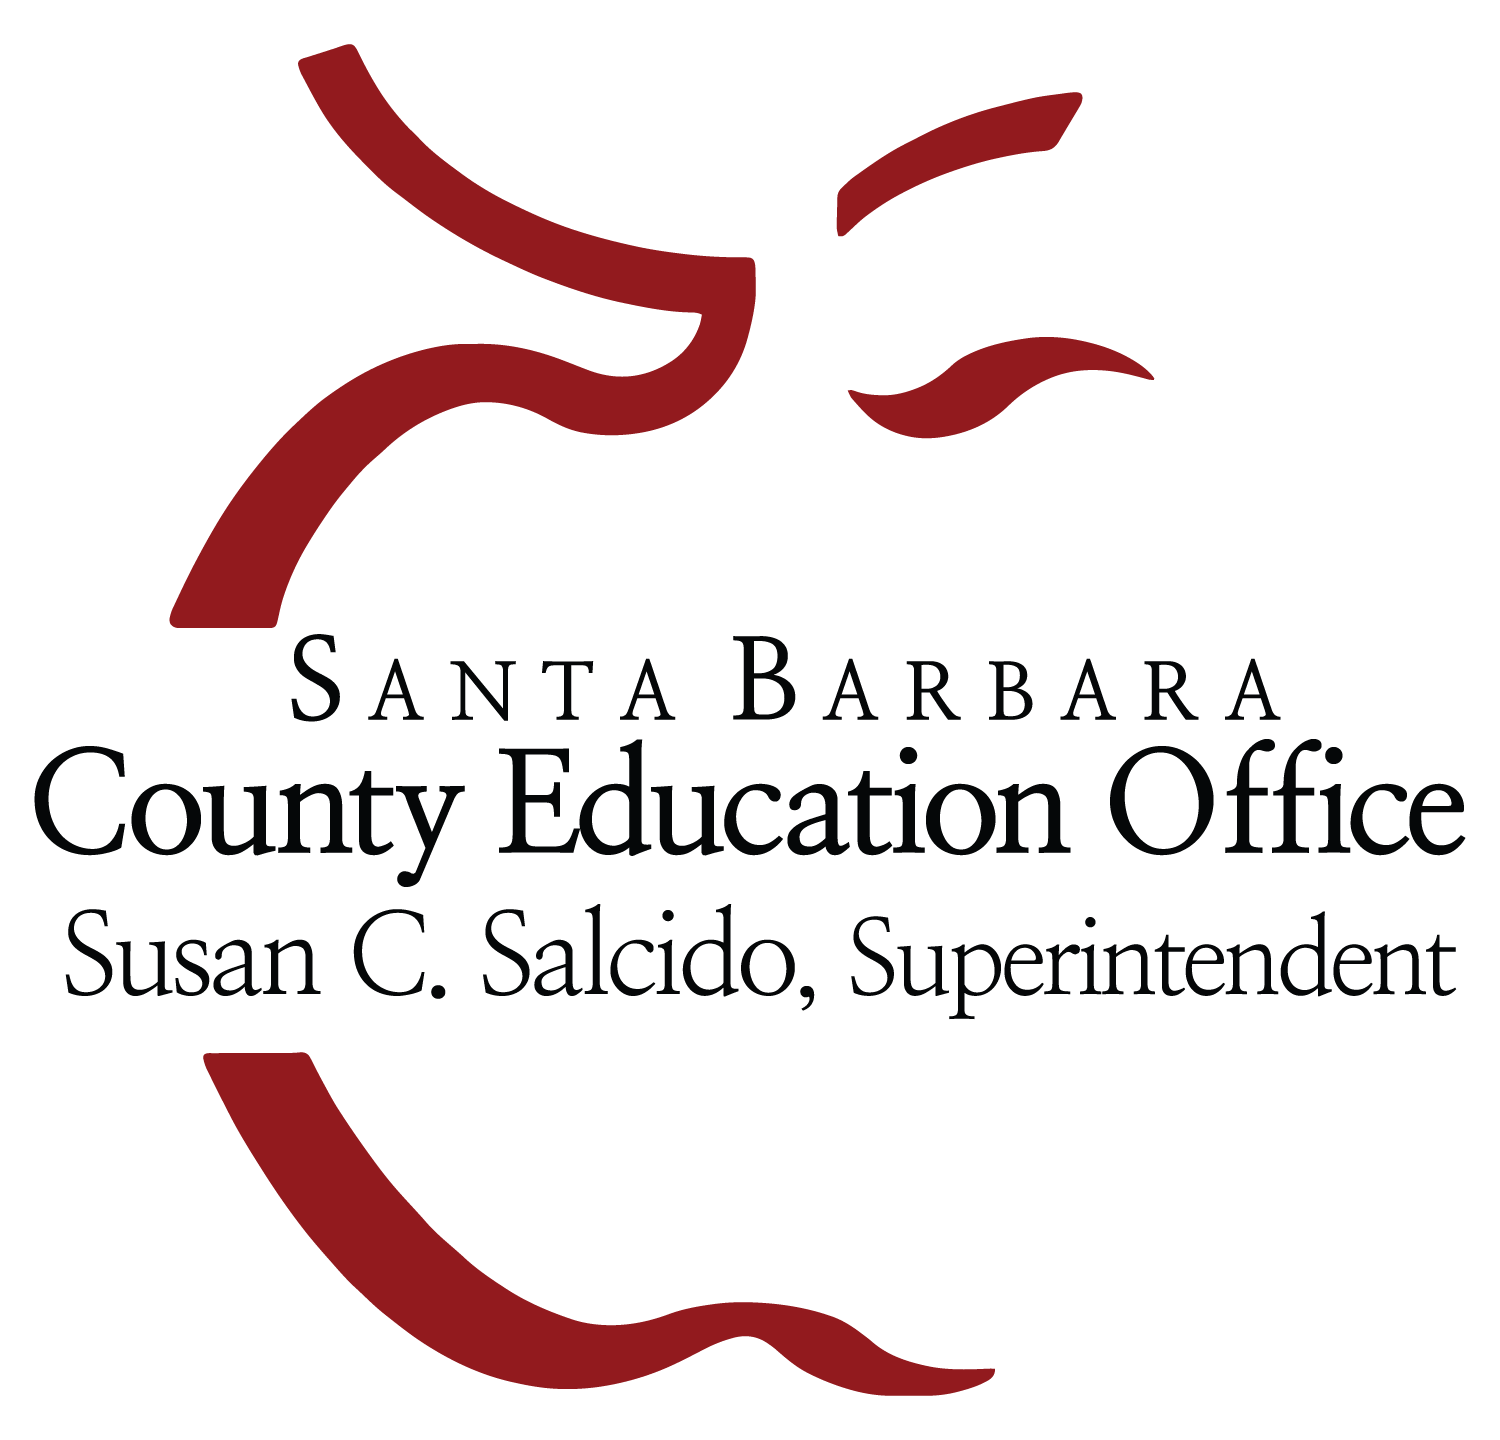 Santa Barbara County Education Office